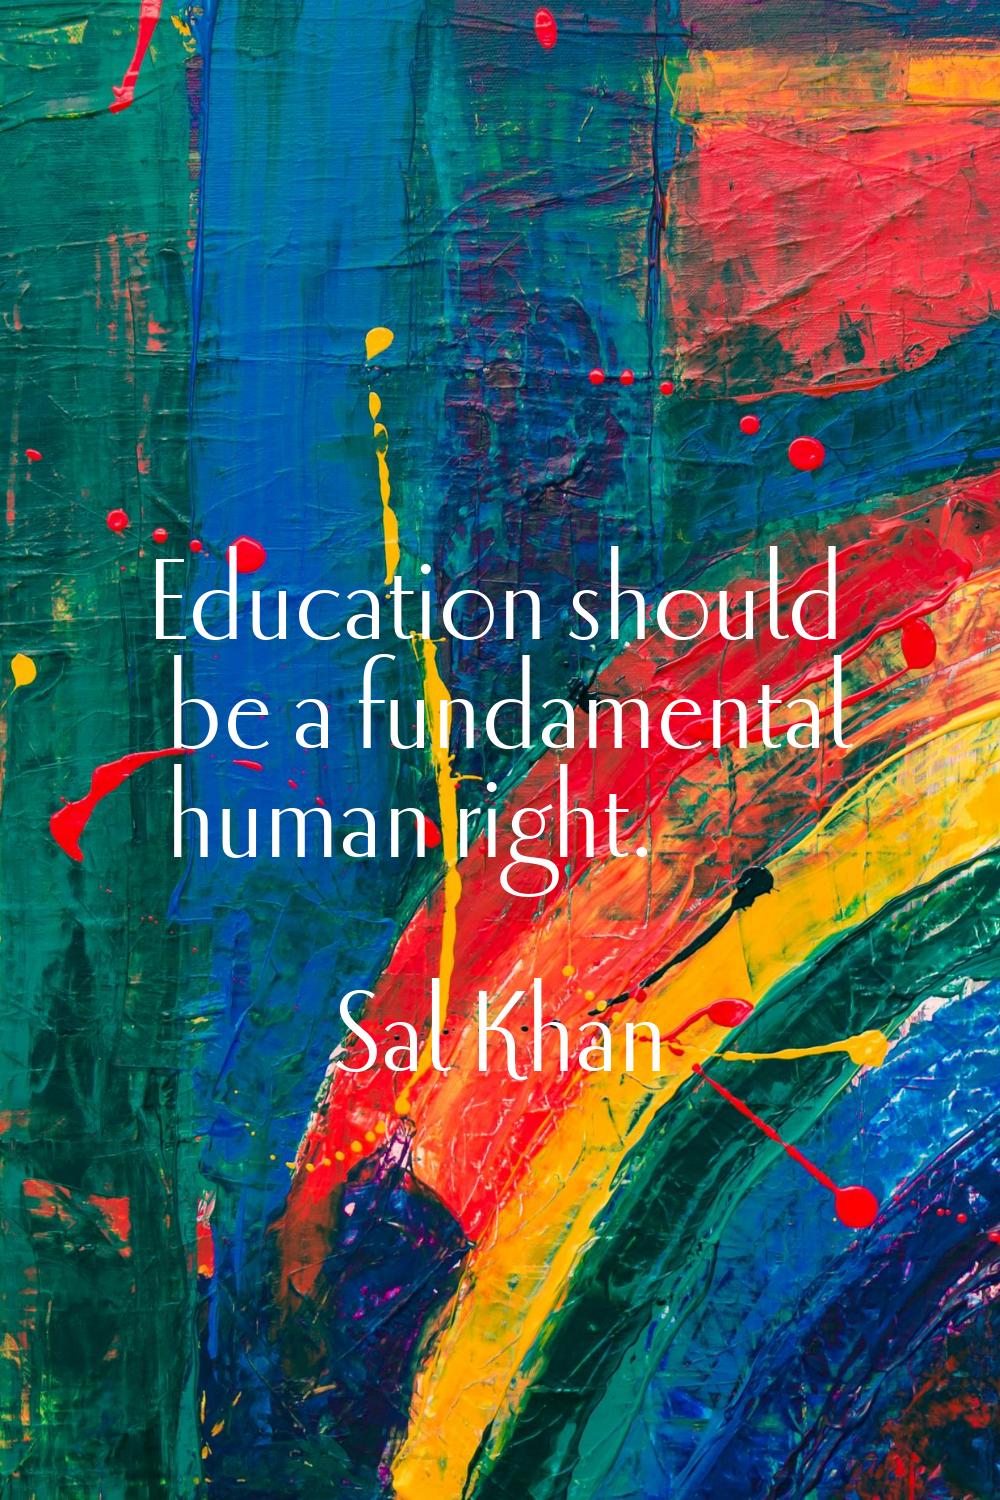 Education should be a fundamental human right.